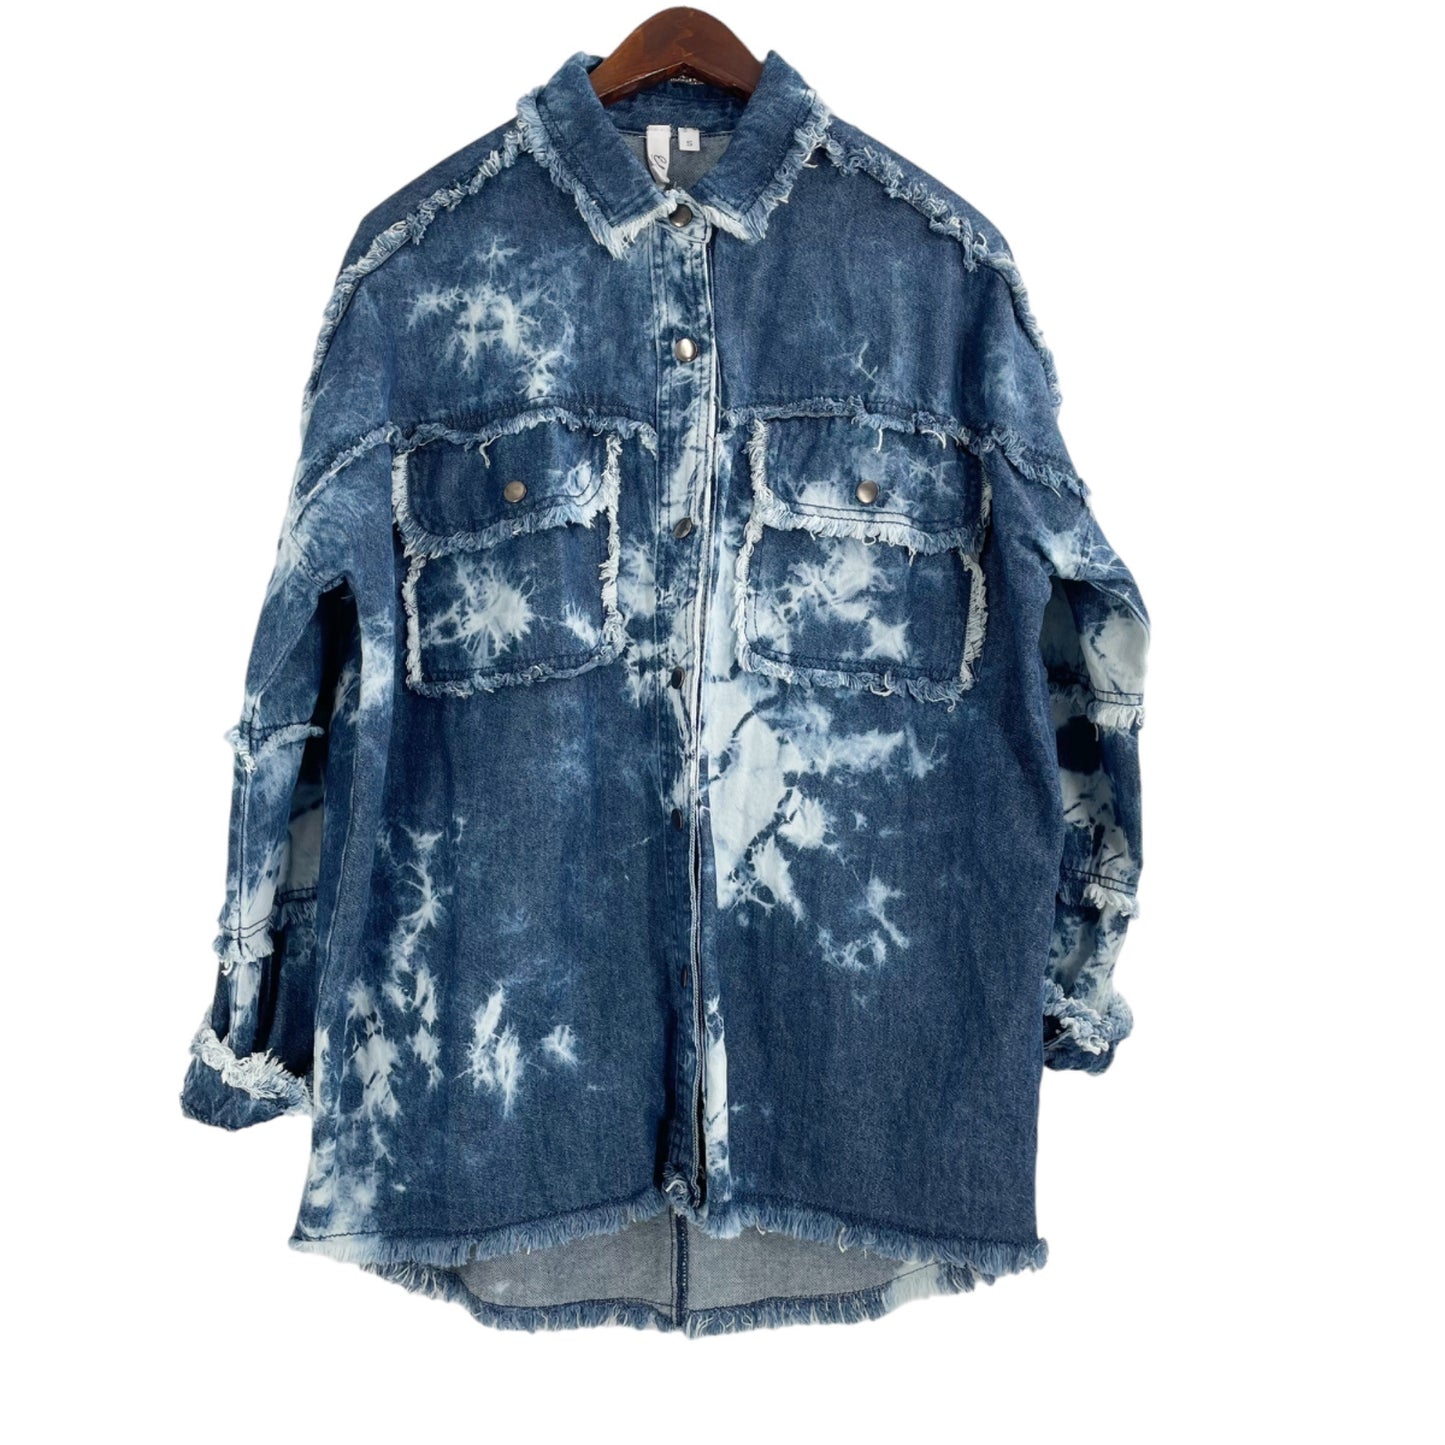 NWT Elan Devan Dari "Rock And Rol" Blue Acid Wash Shacket Jacket Women's Small